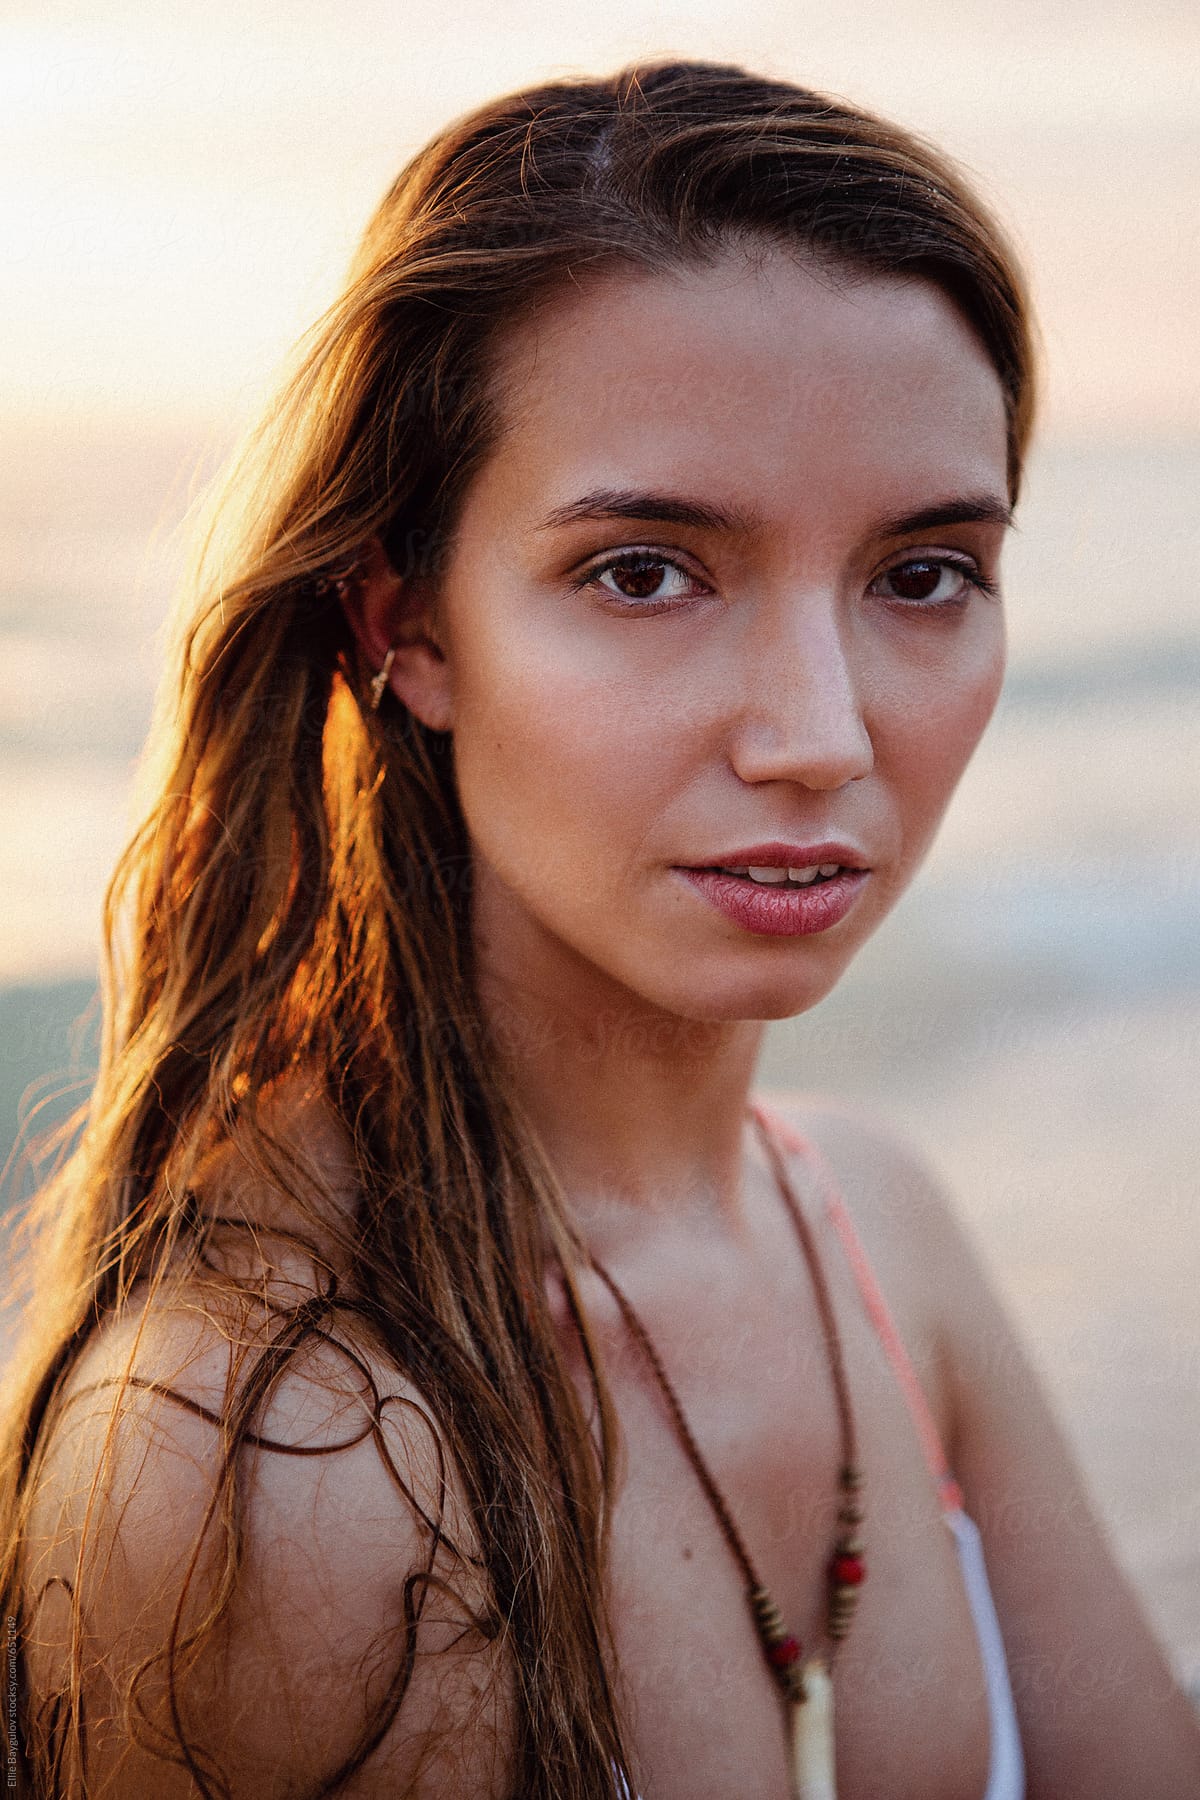 Headshot Of A Beautiful Young Woman By Stocksy Contributor Ellie Baygulov Stocksy 6458